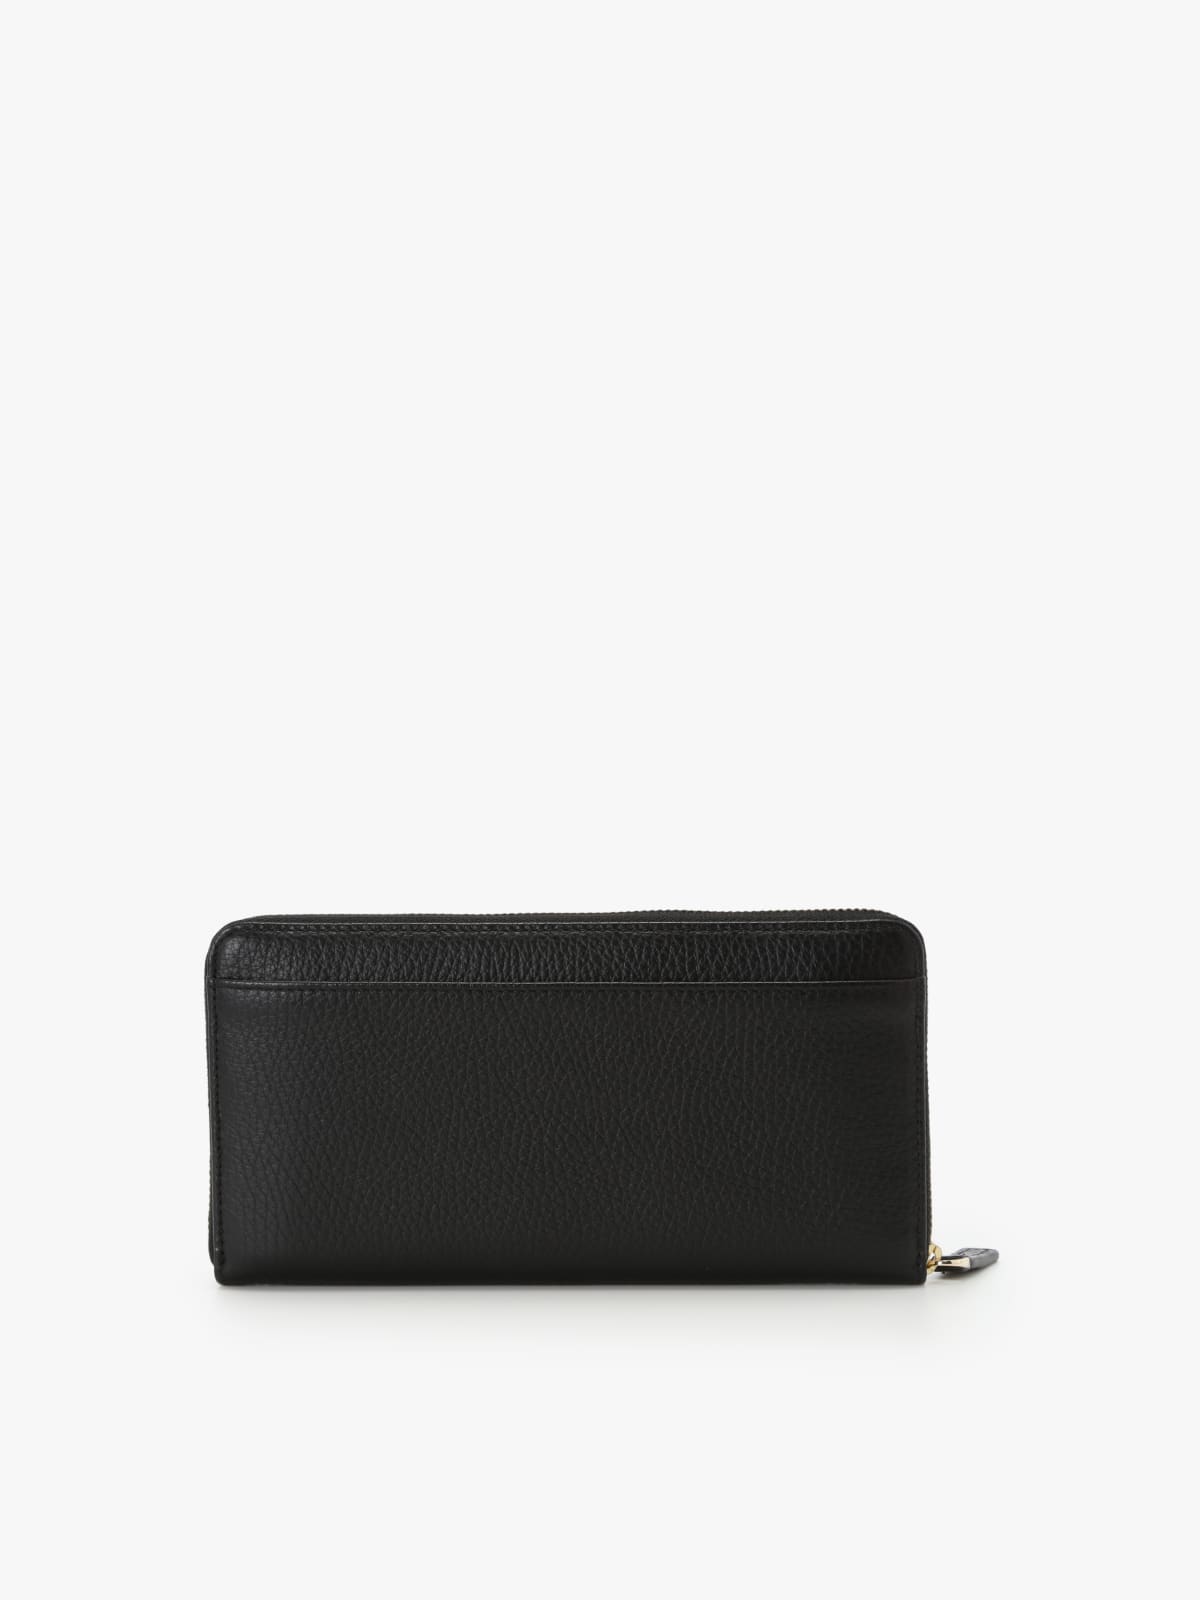 black smooth leather "b." logo wallet